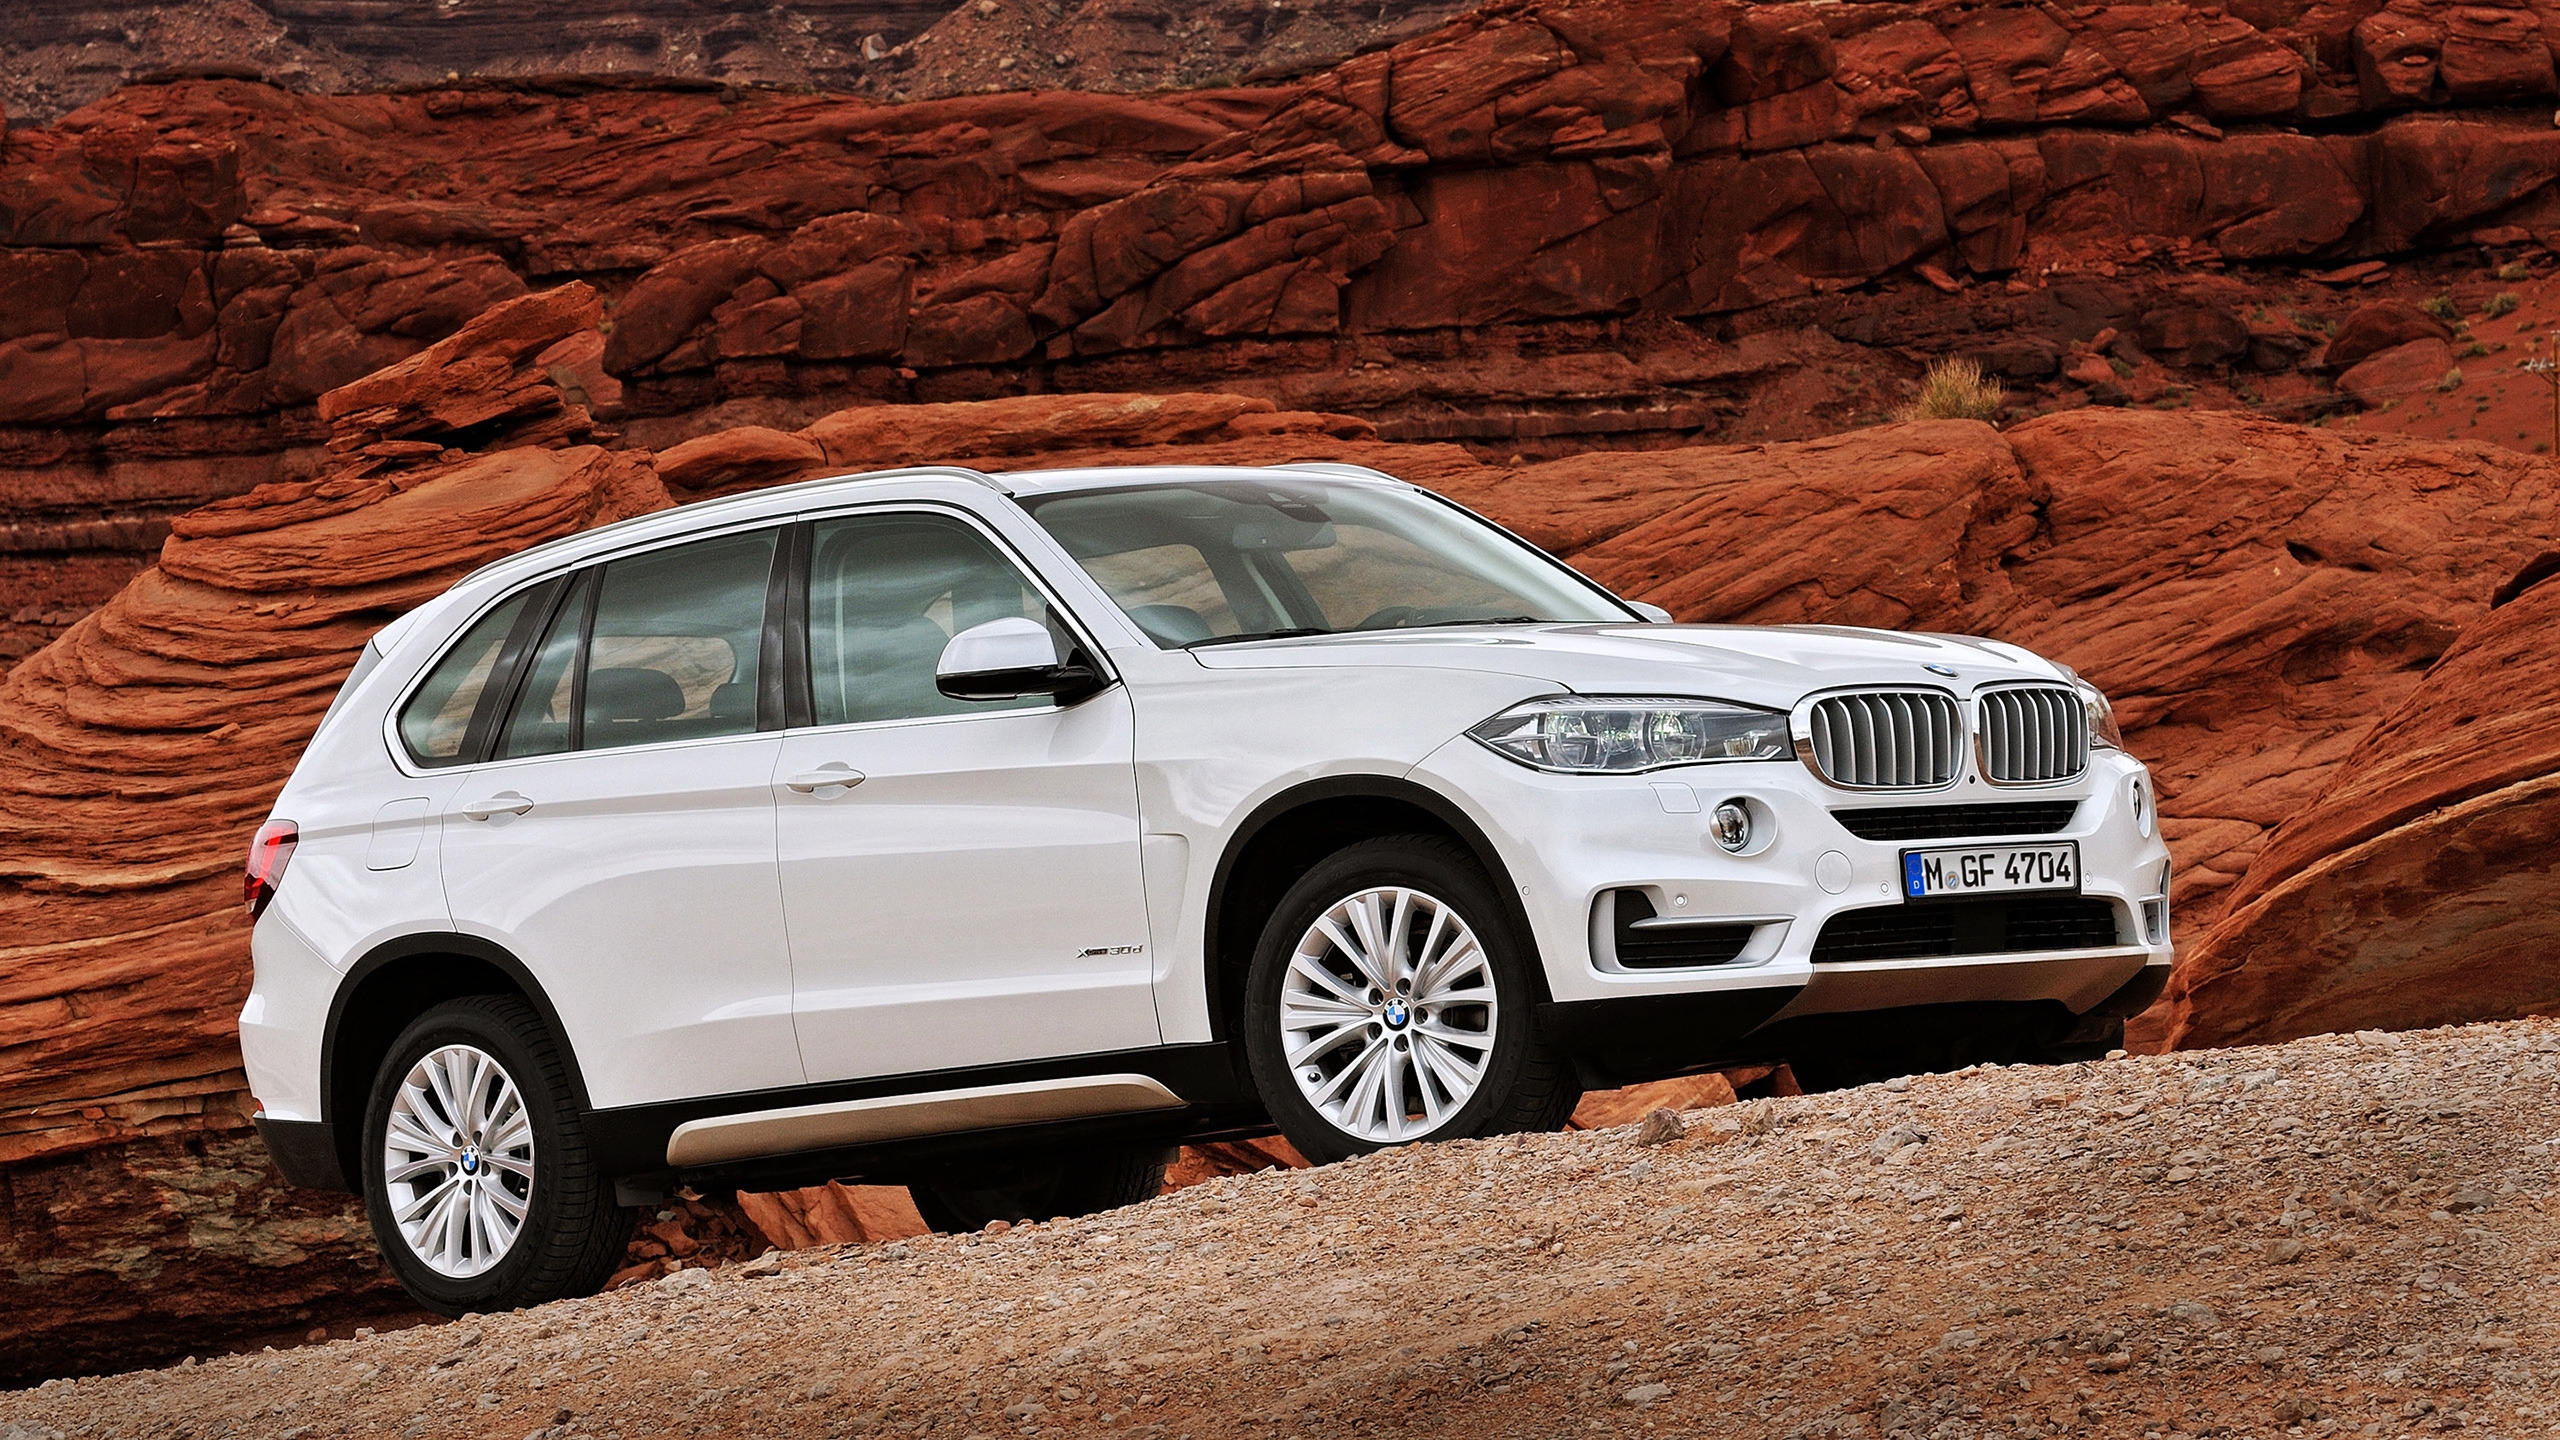 White BMW 2014 X5 for 2560x1440 HDTV resolution